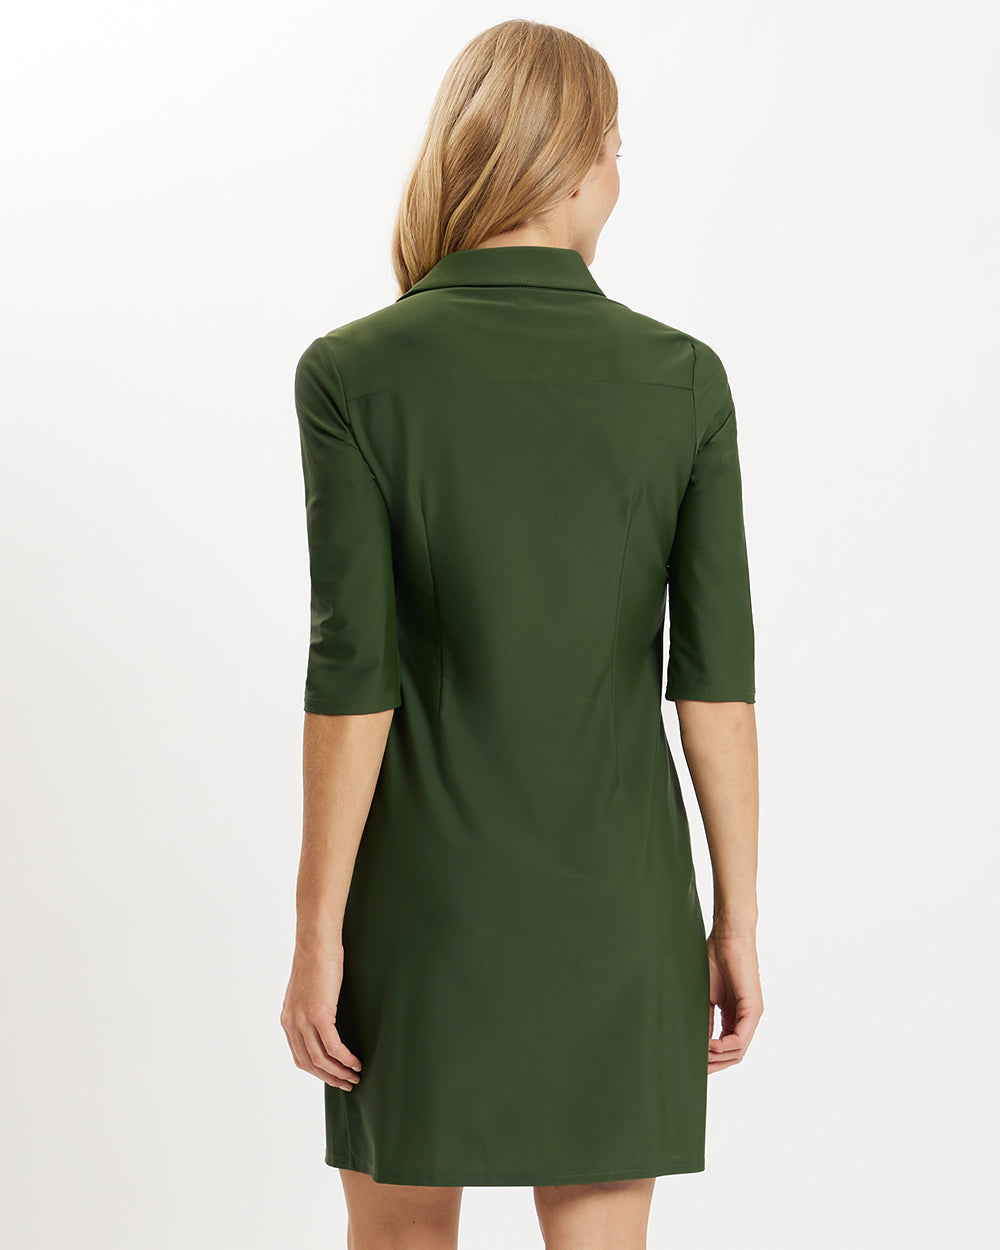 Sloane Dress - Jude Cloth